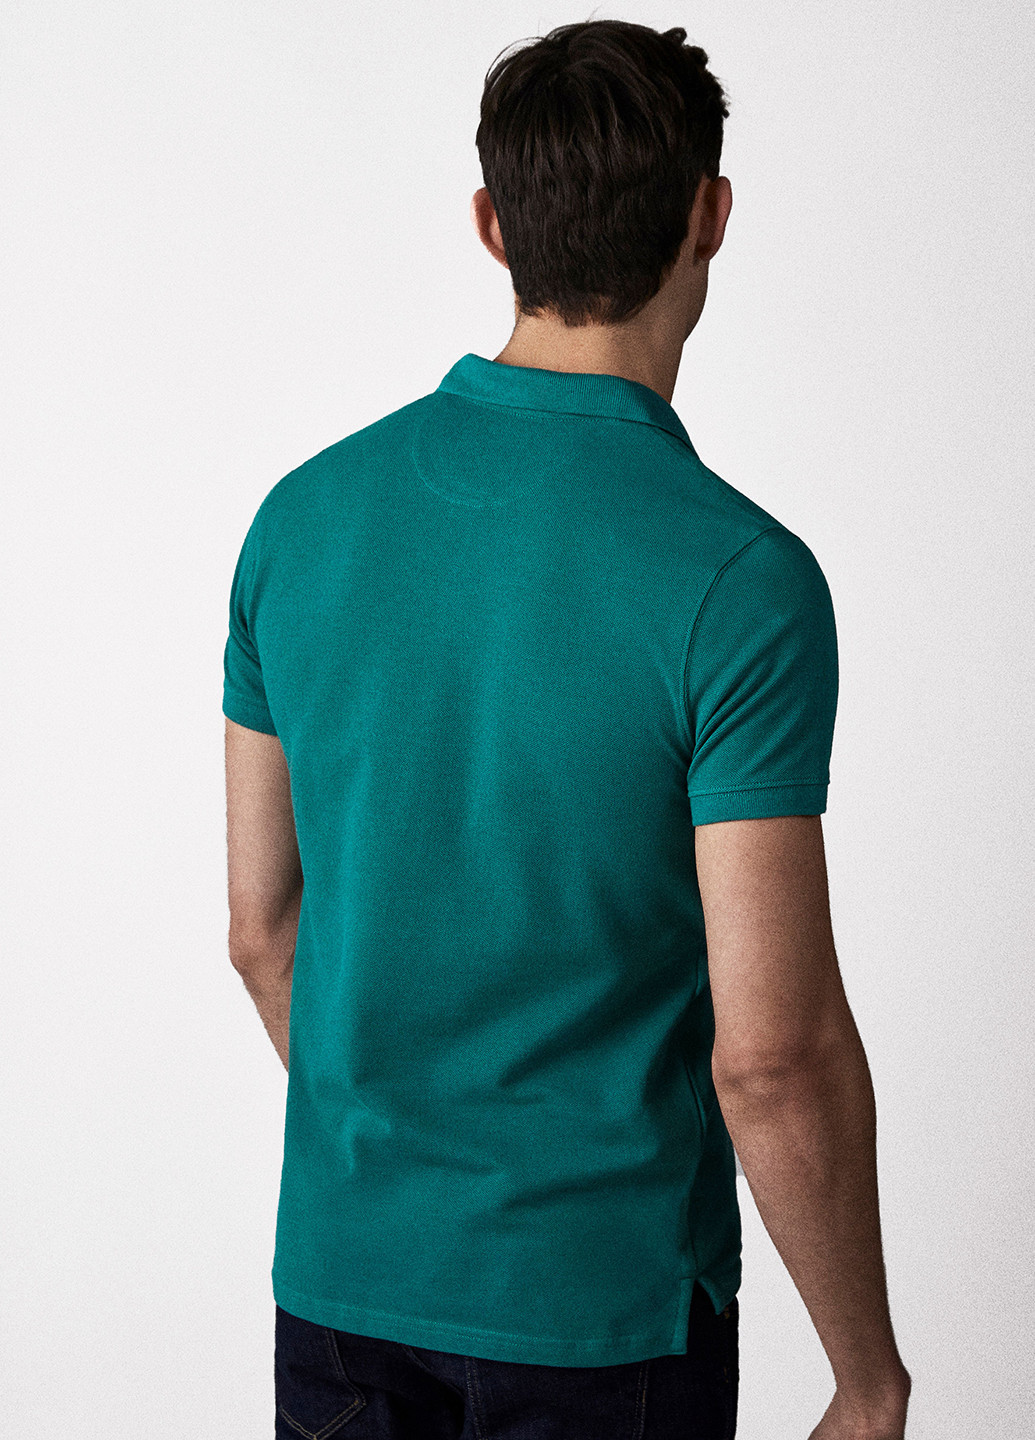 Зеленая футболка-поло для мужчин Massimo Dutti однотонная